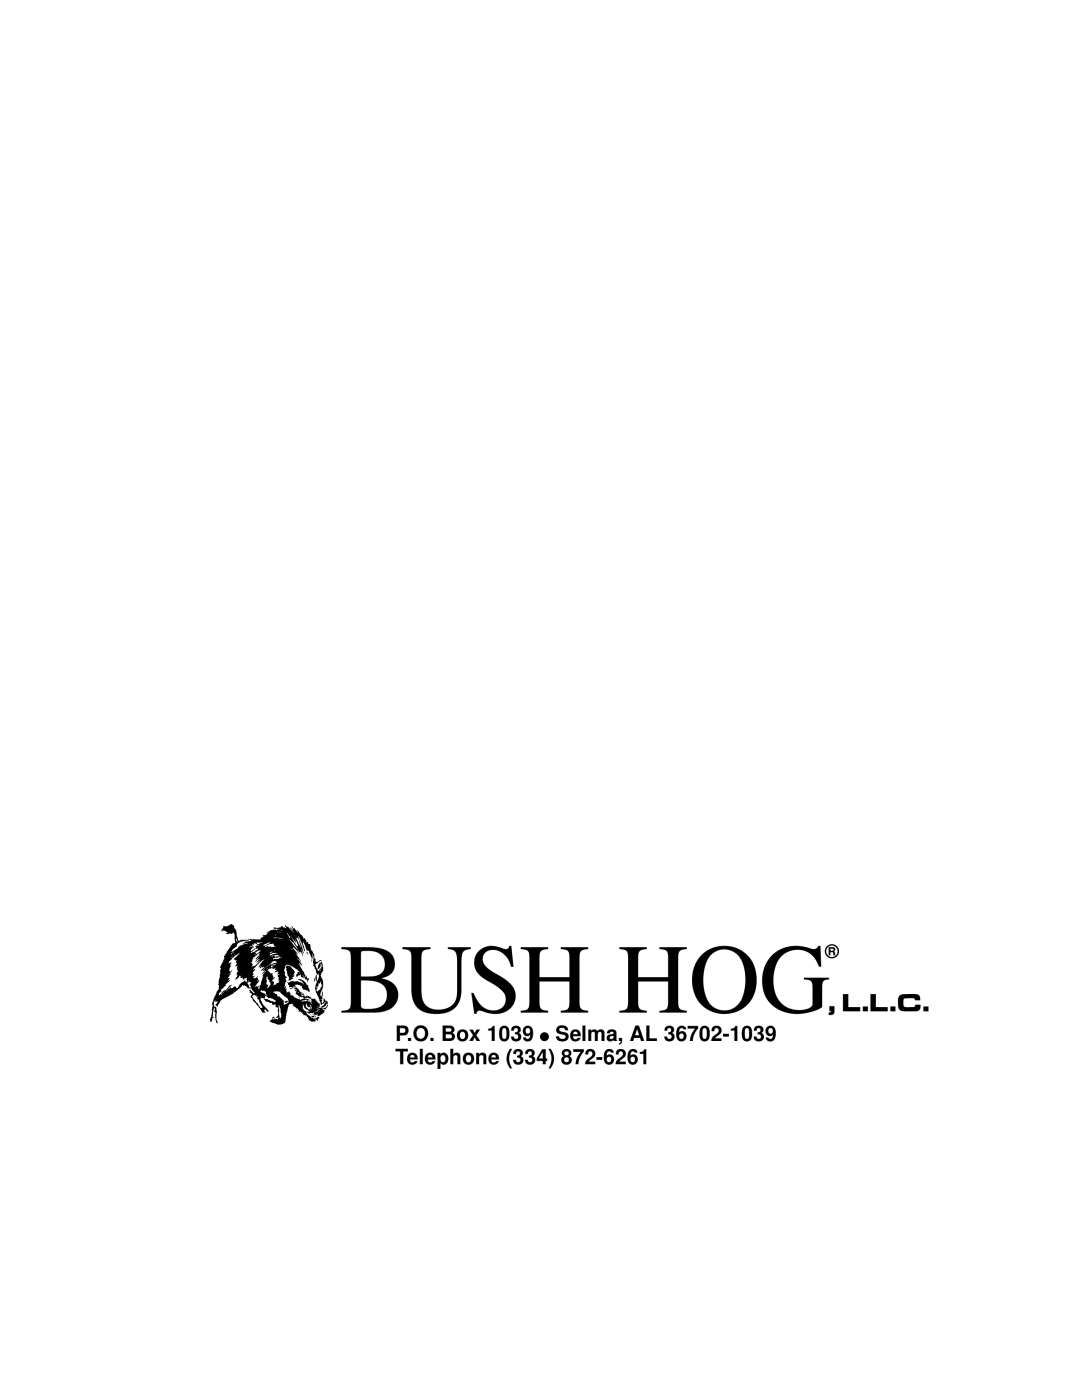 Bush Hog HM2009, HM2008, HM2007 manual Bush Hog, L.L.C, P.O. Box 1039 Selma, AL Telephone 334 